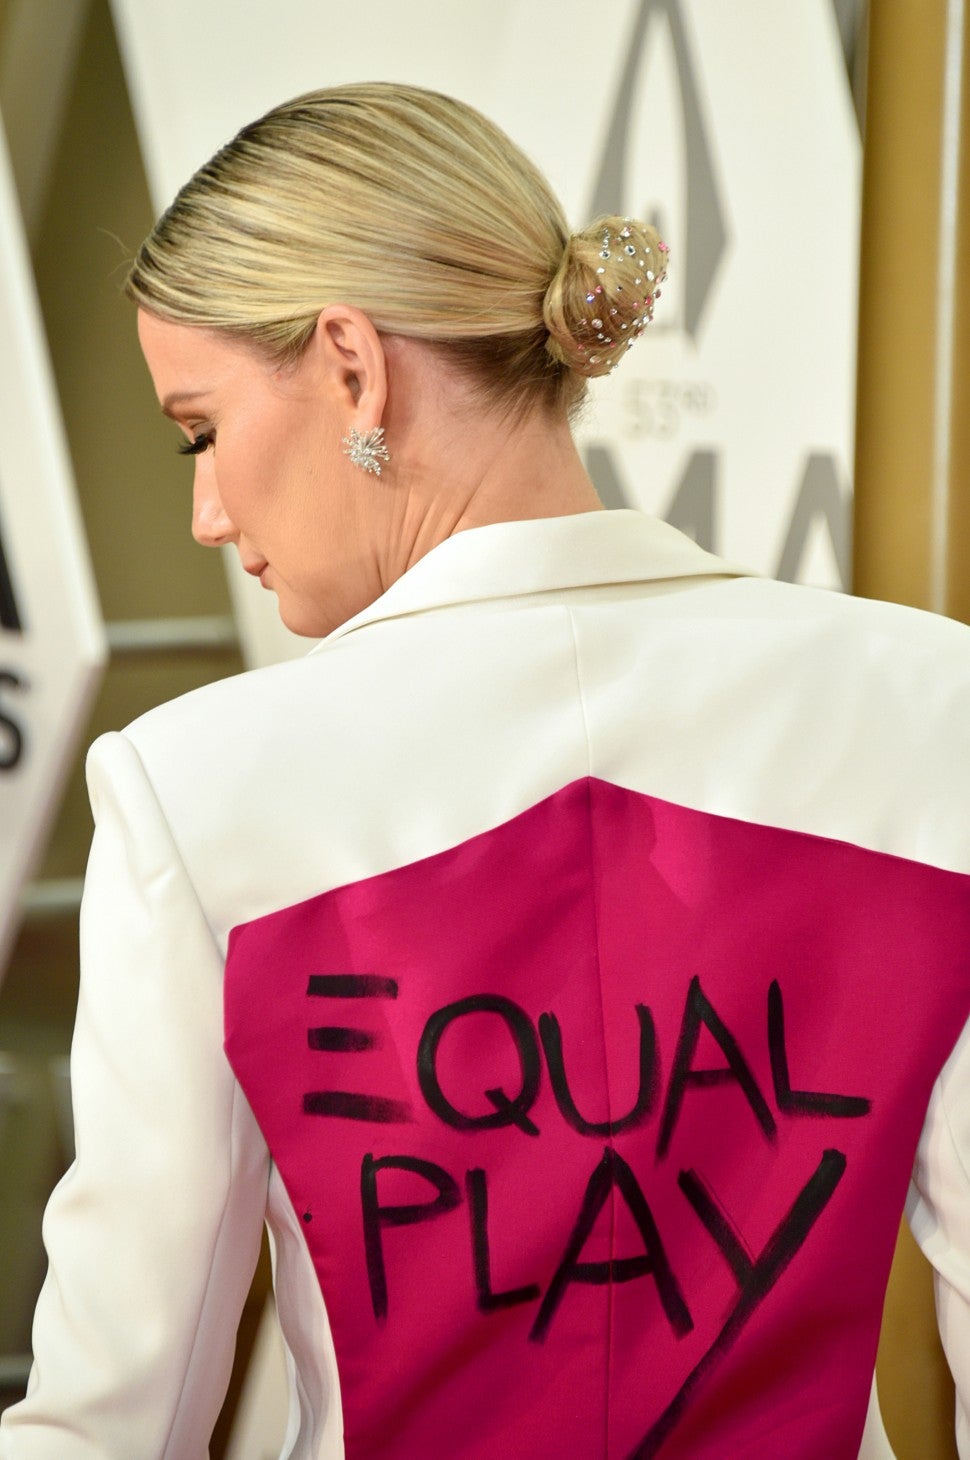 Jennifer Nettles equal play suit at 2019 CMA Awards